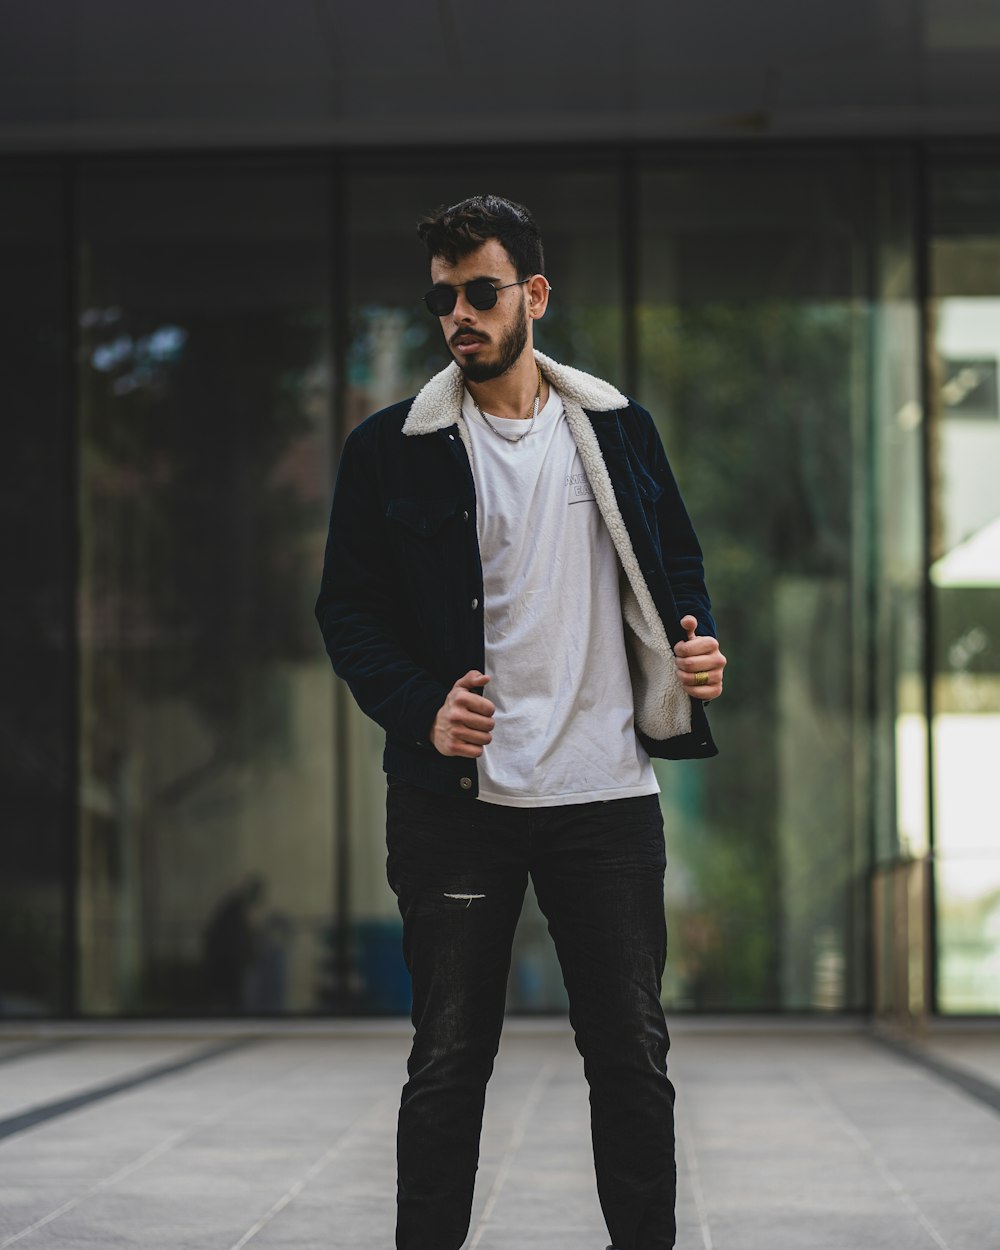 Man in black jacket and white shirt standing on gray pavement photo – Free  Tel aviv Image on Unsplash